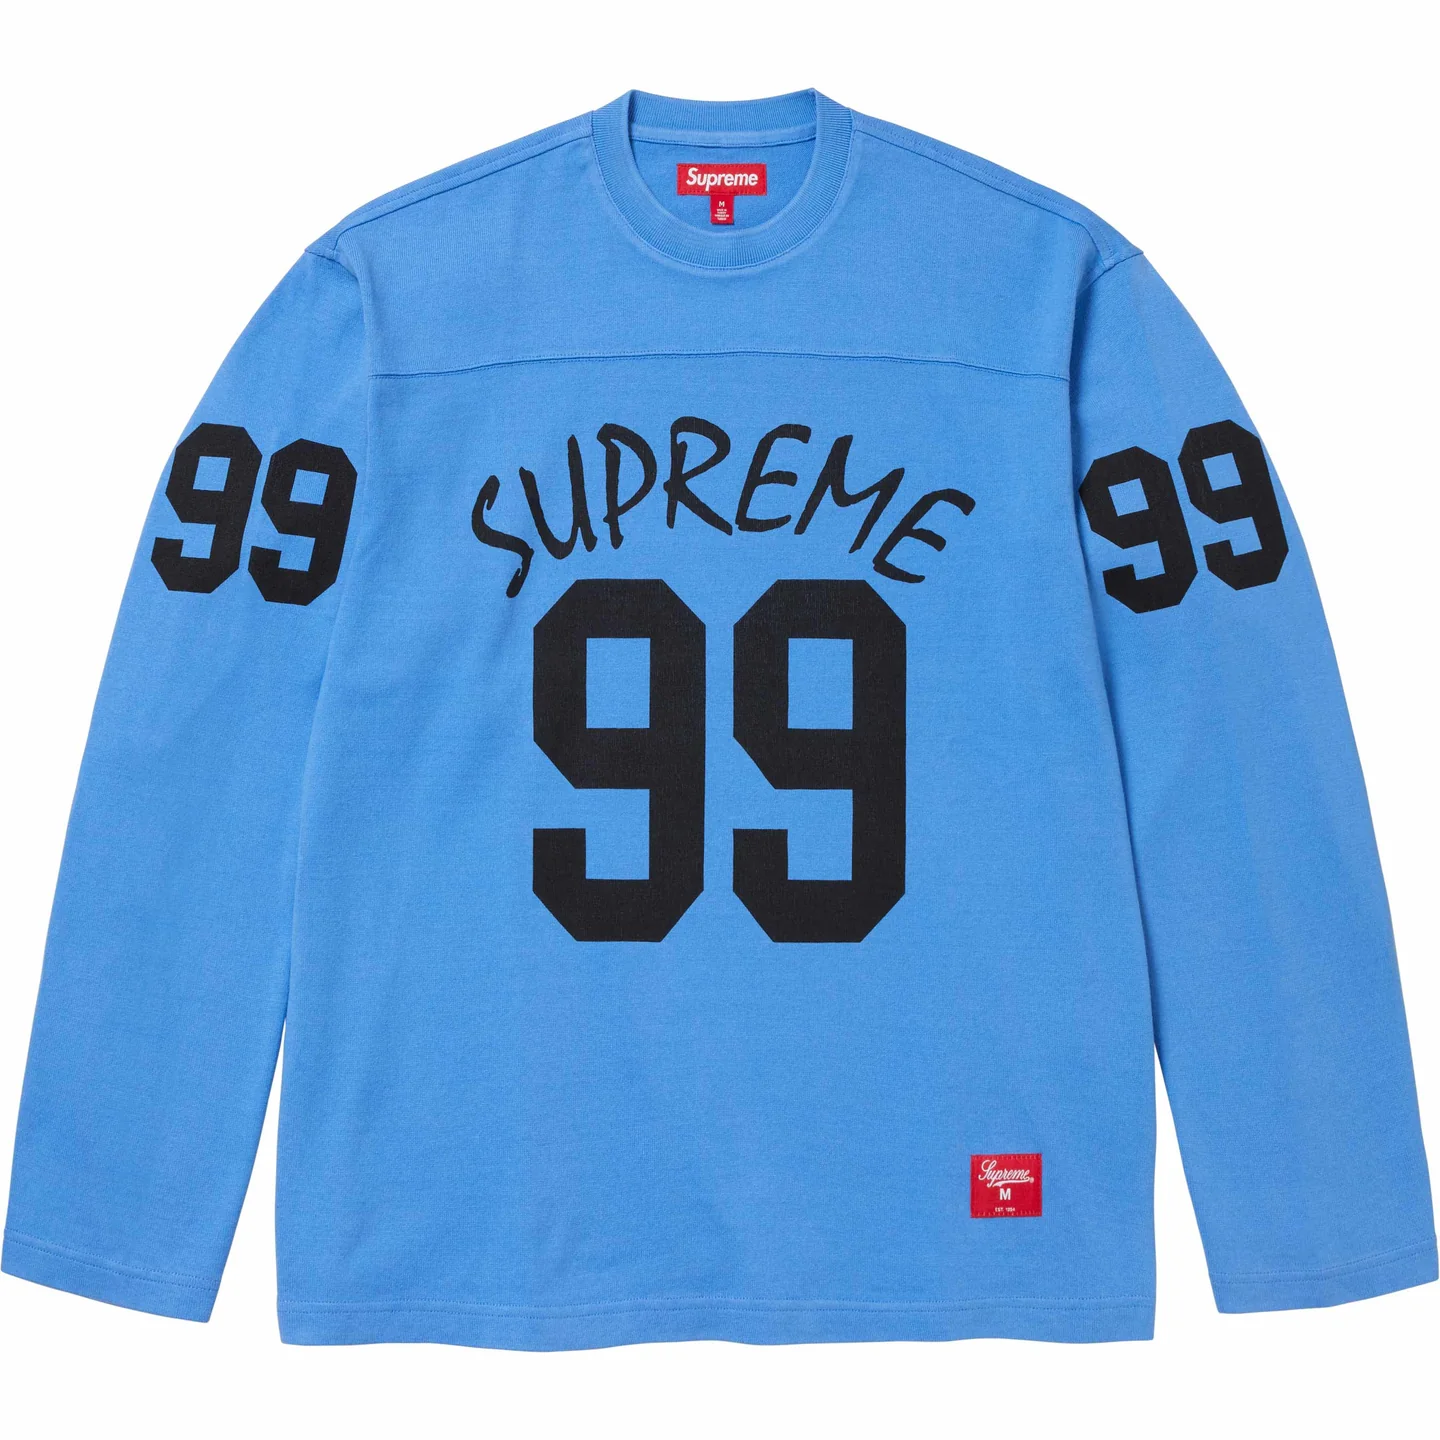 Supreme 99 L/S Football Top